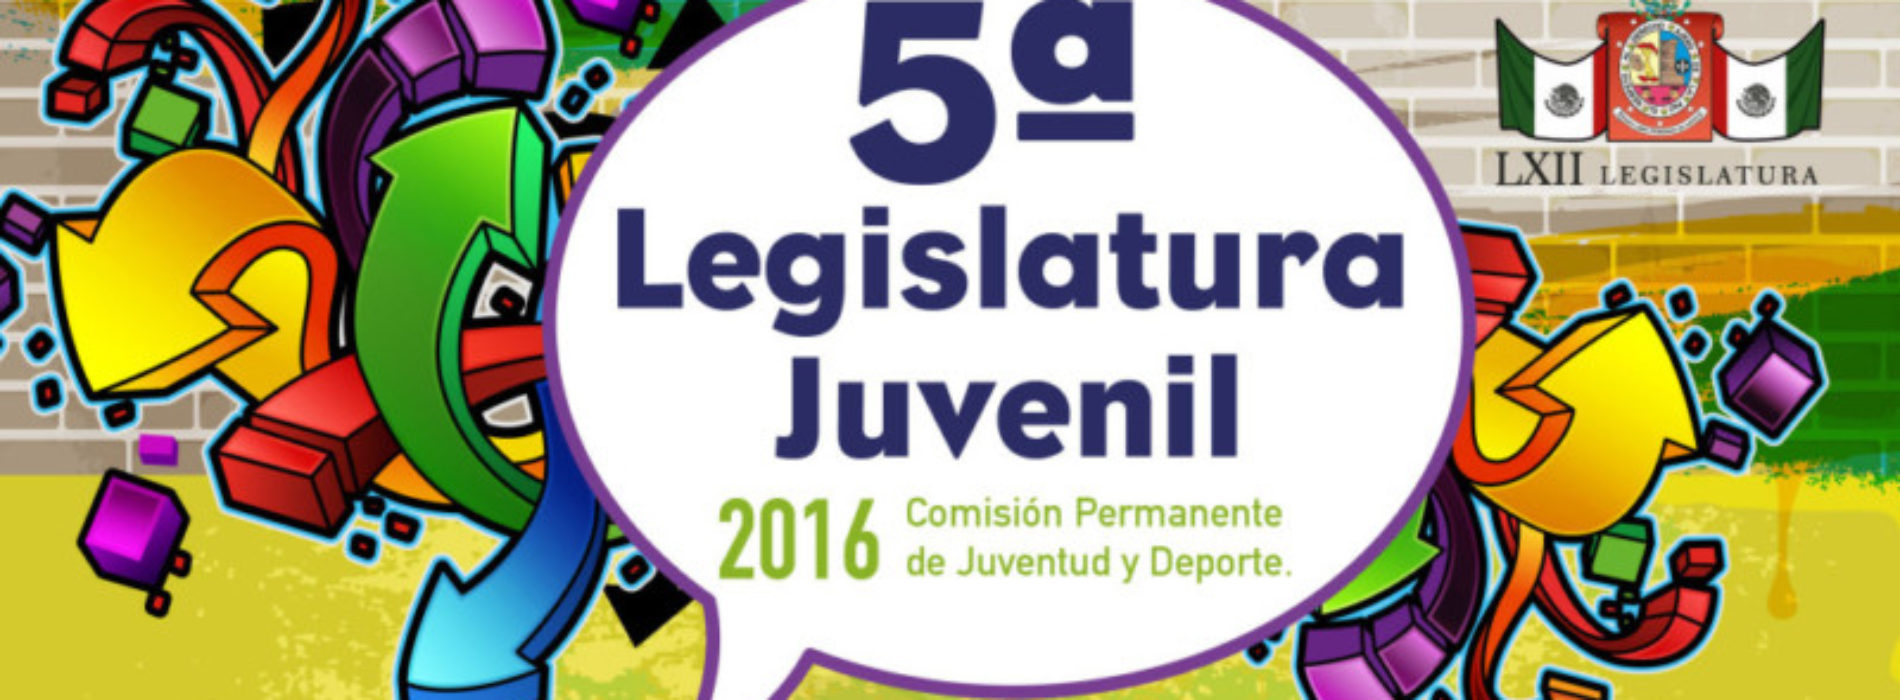 CONGRESO CONVOCA LEGISLATURA JUVENIL 2016